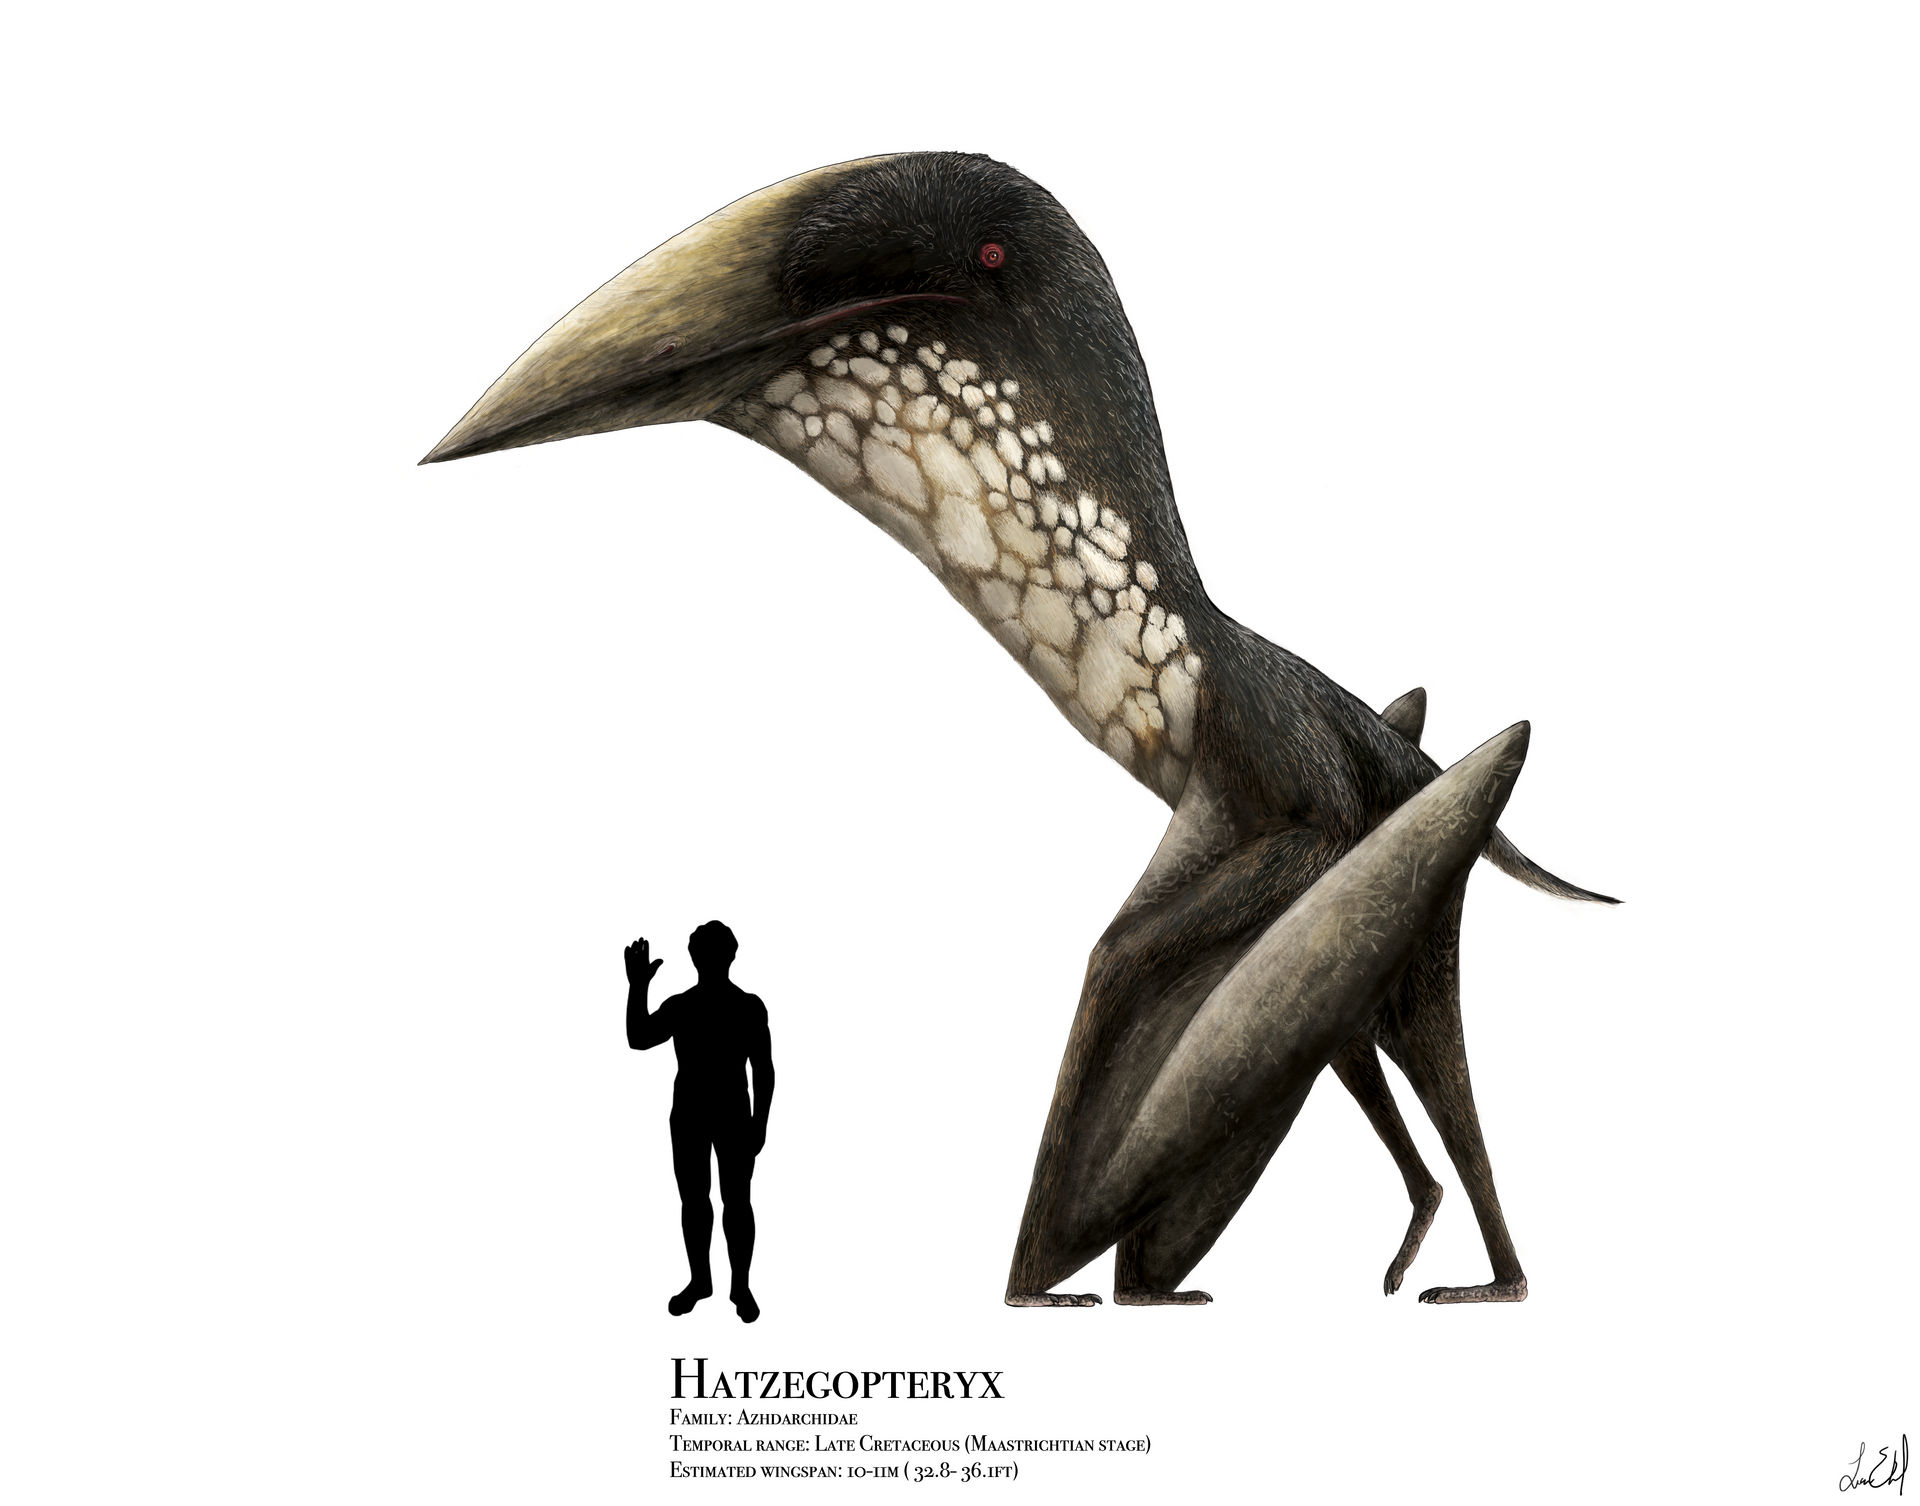 hatzegopteryx_by_prehistorybyliam_dcrnjlc-fullview.jpg